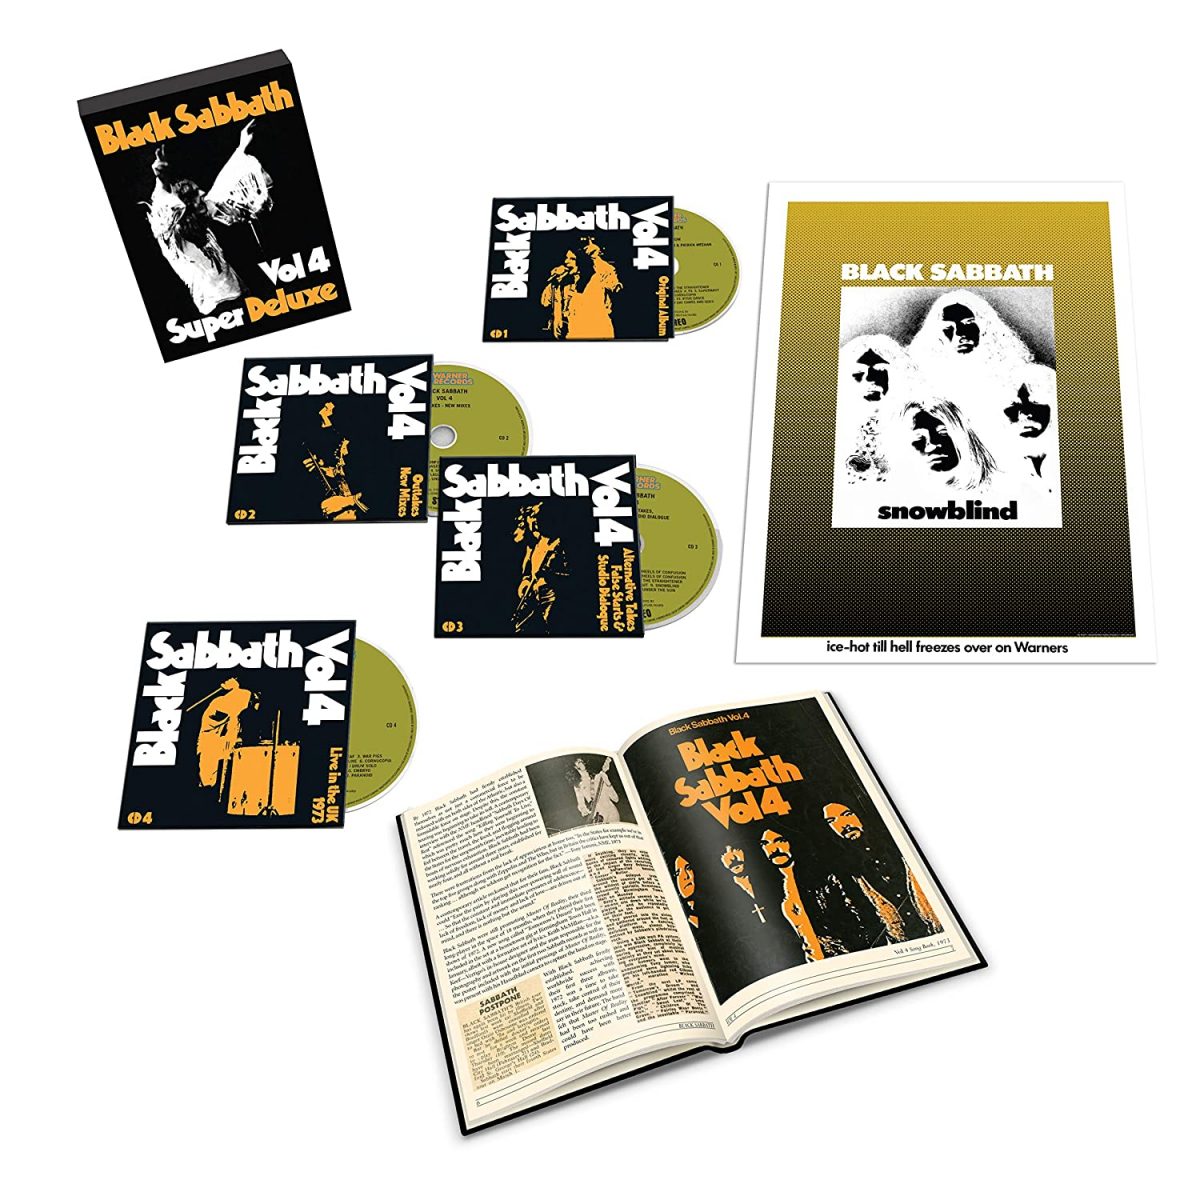 Black Sabbath - Vol 4 - CD Version